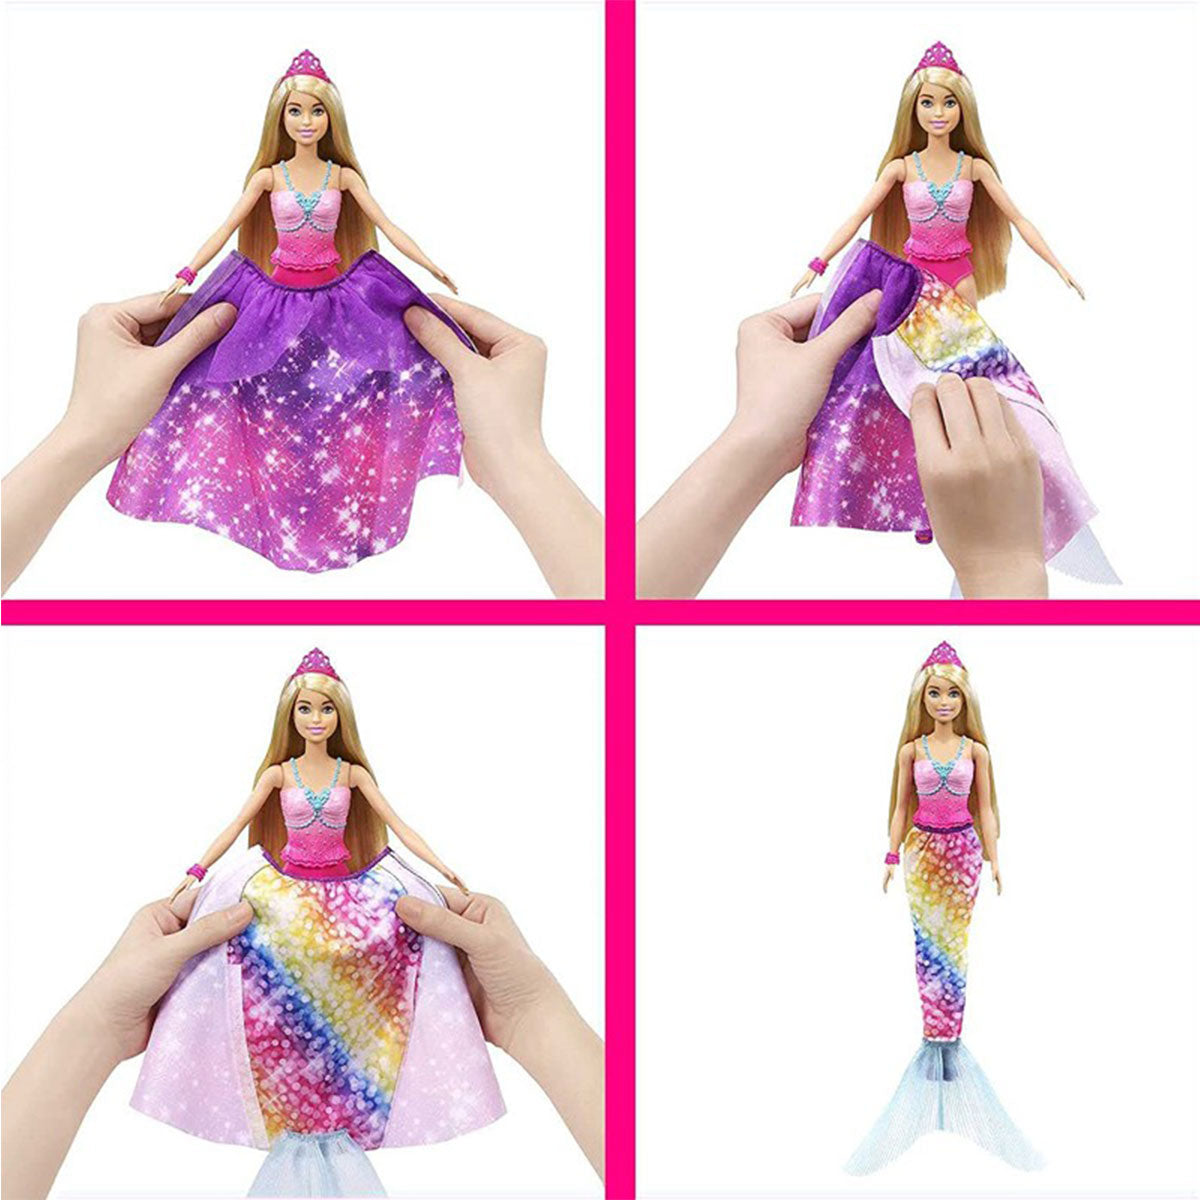 Barbie - 2-In-1 Princess To Mermaid (Styles Vary - One Supplied)